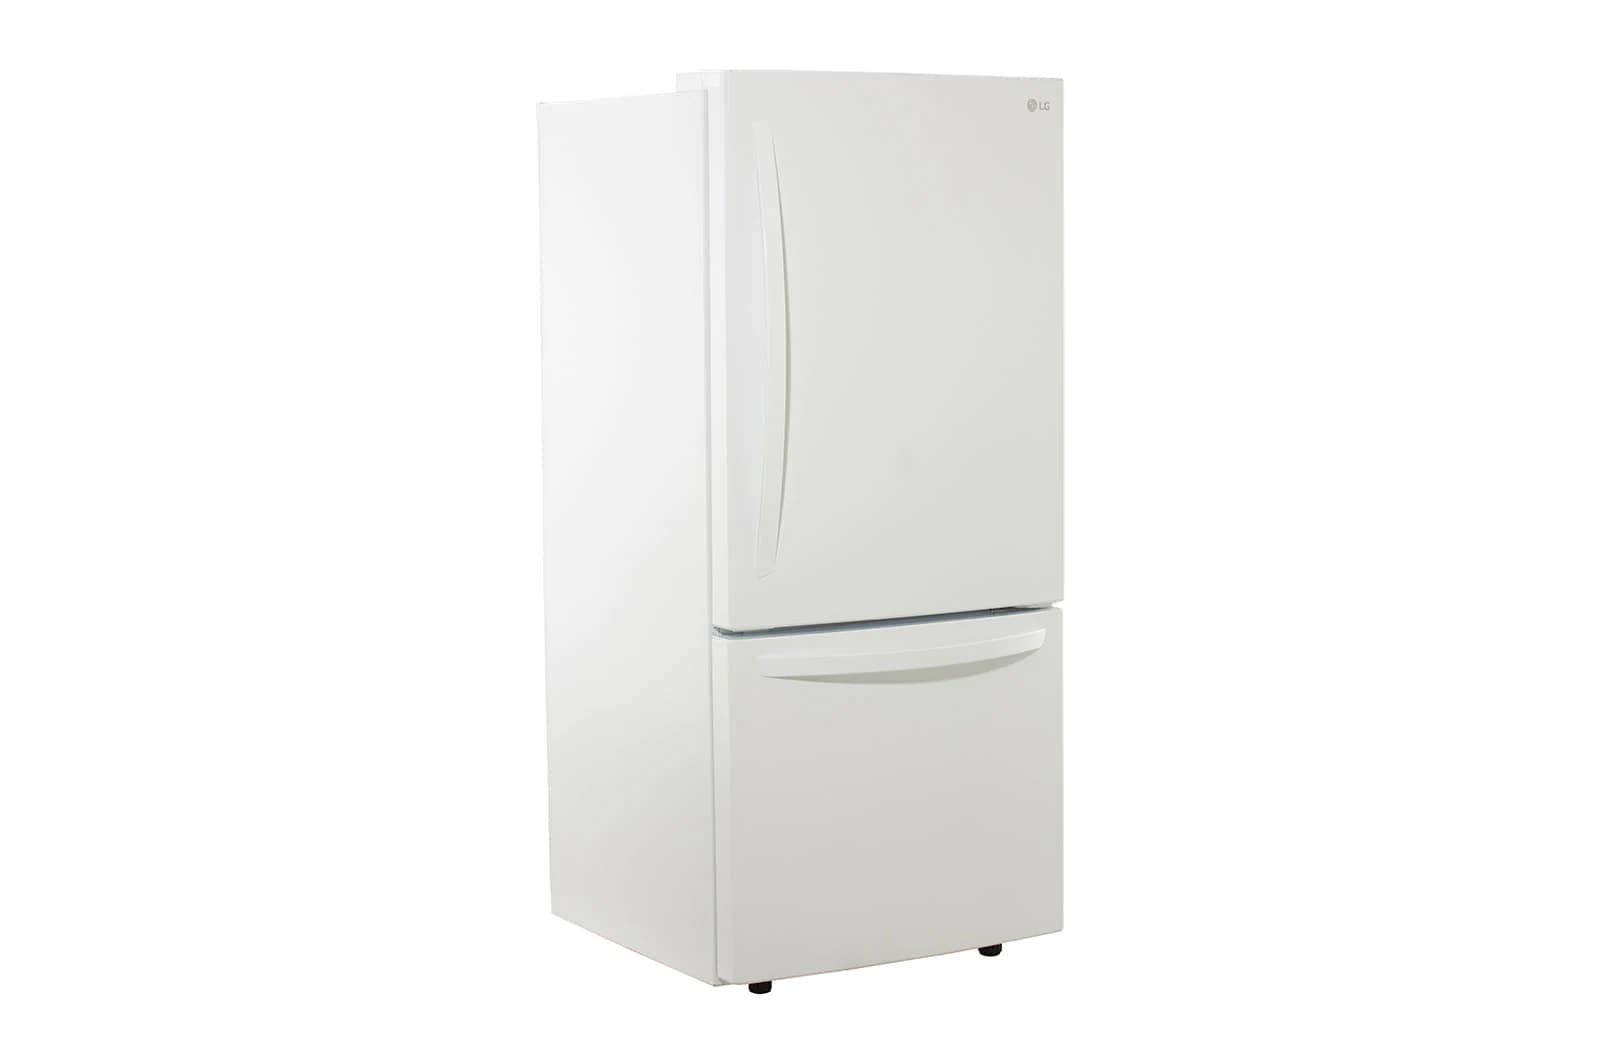 LG - 29.75 Inch 22.1 cu. ft Bottom Mount Refrigerator in White - LRDNS2200W